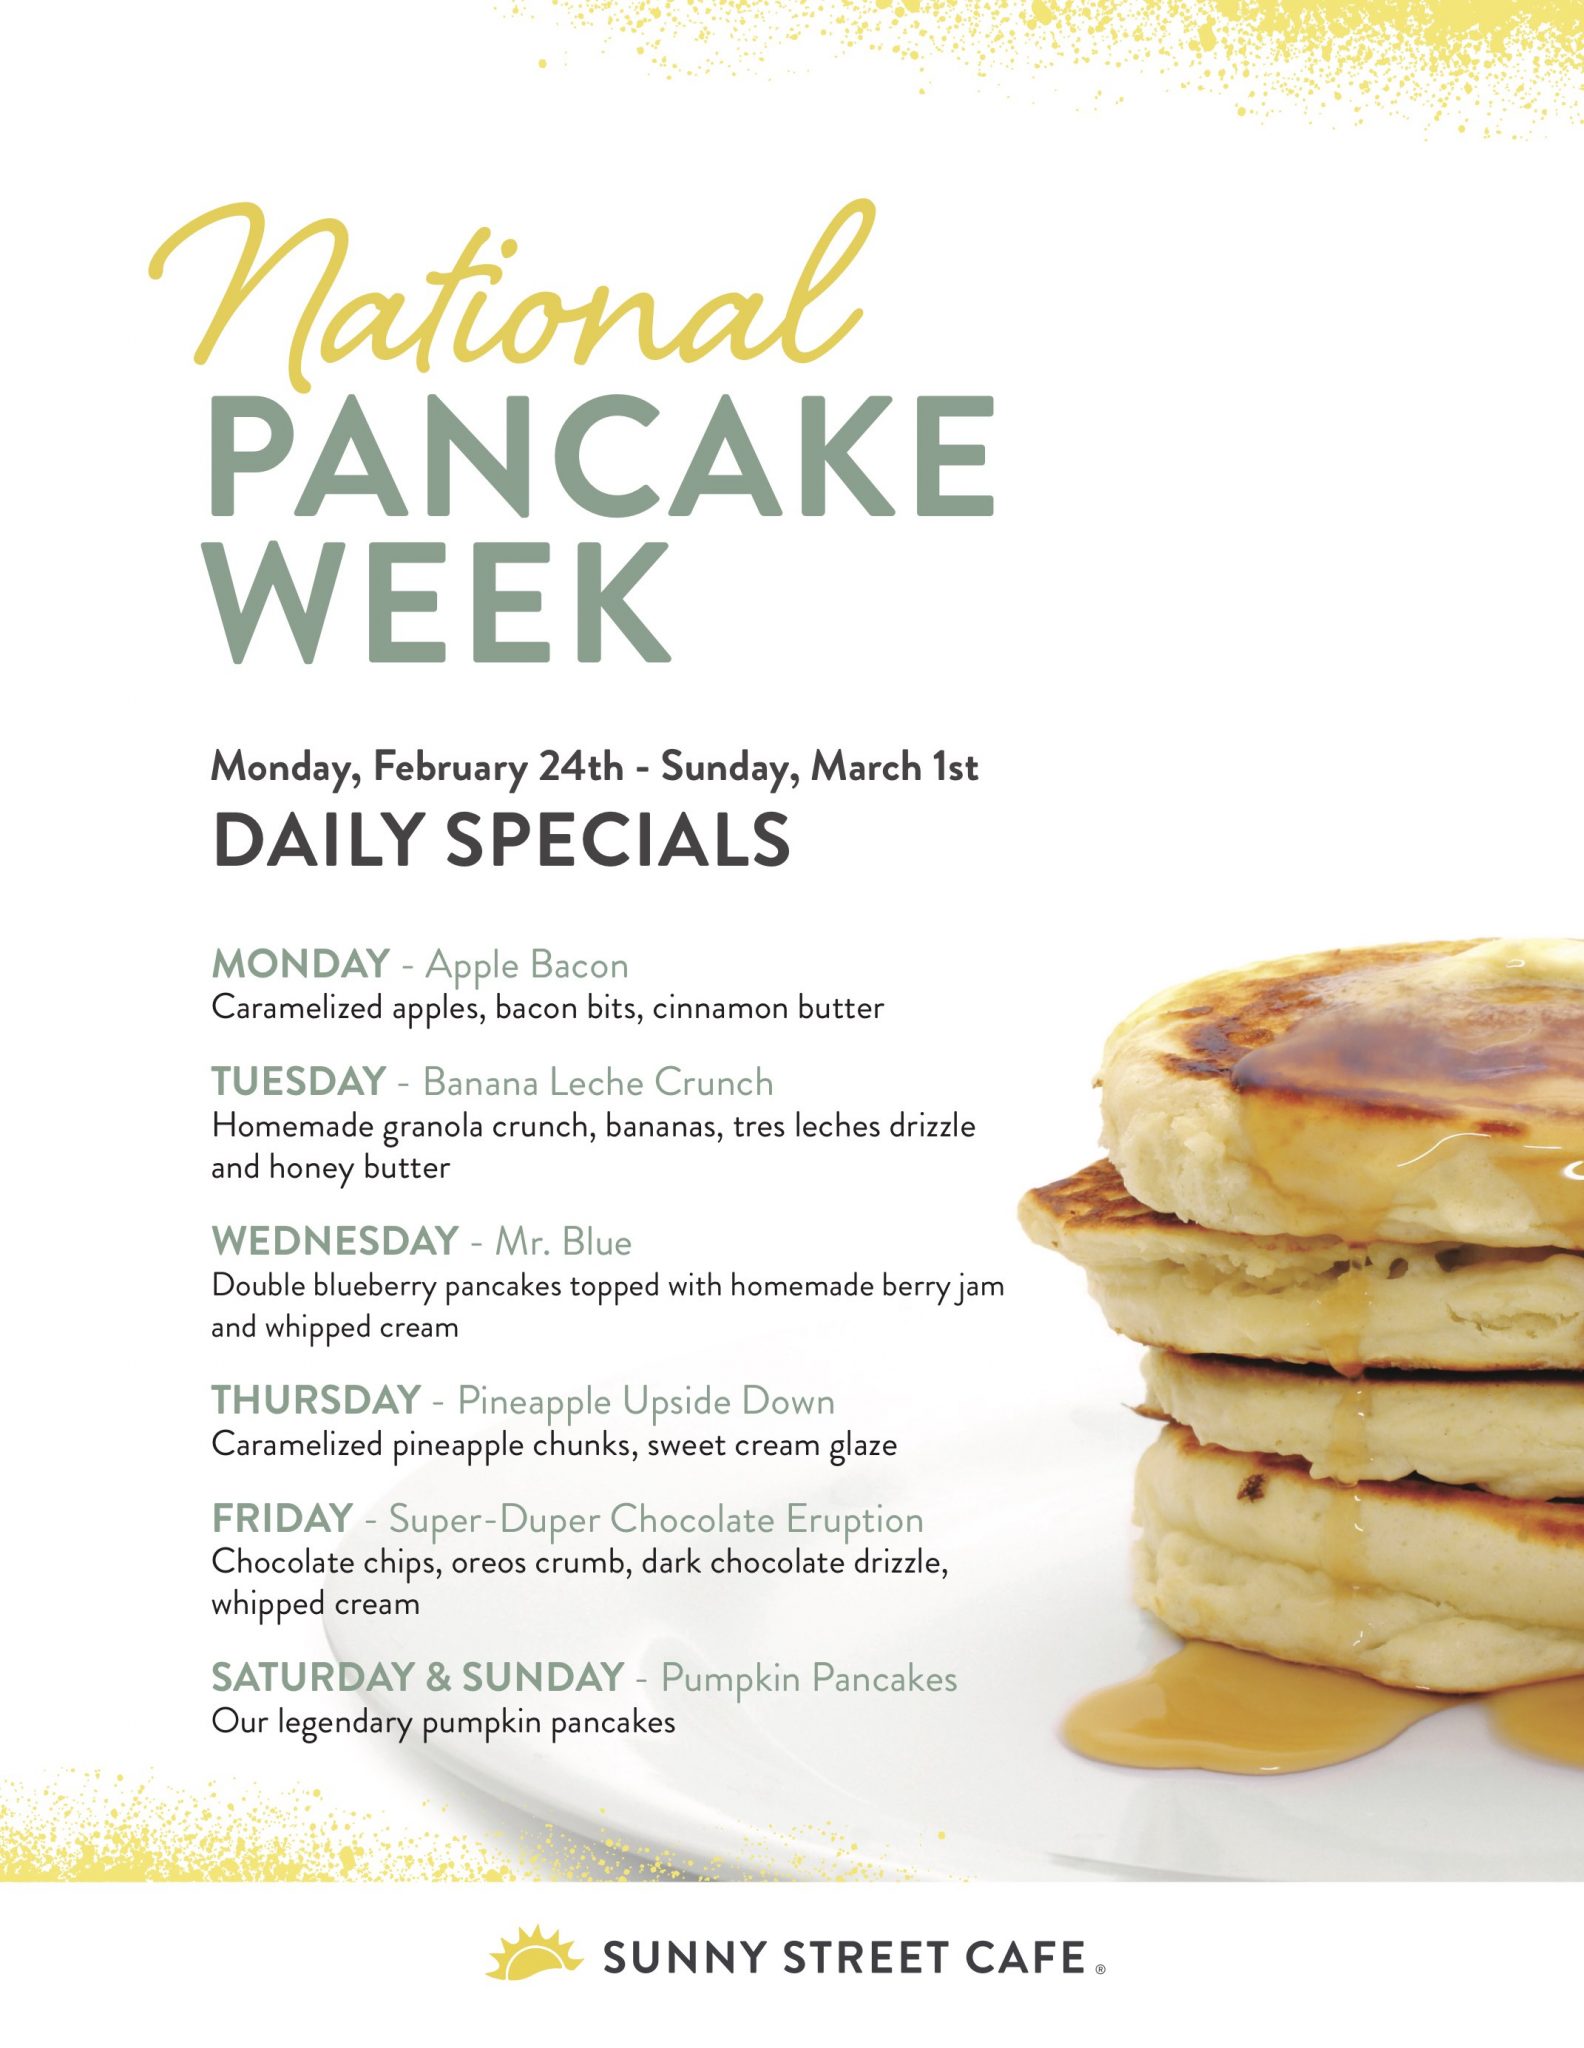 National Pancake Week Specials - Sunny Street Cafe